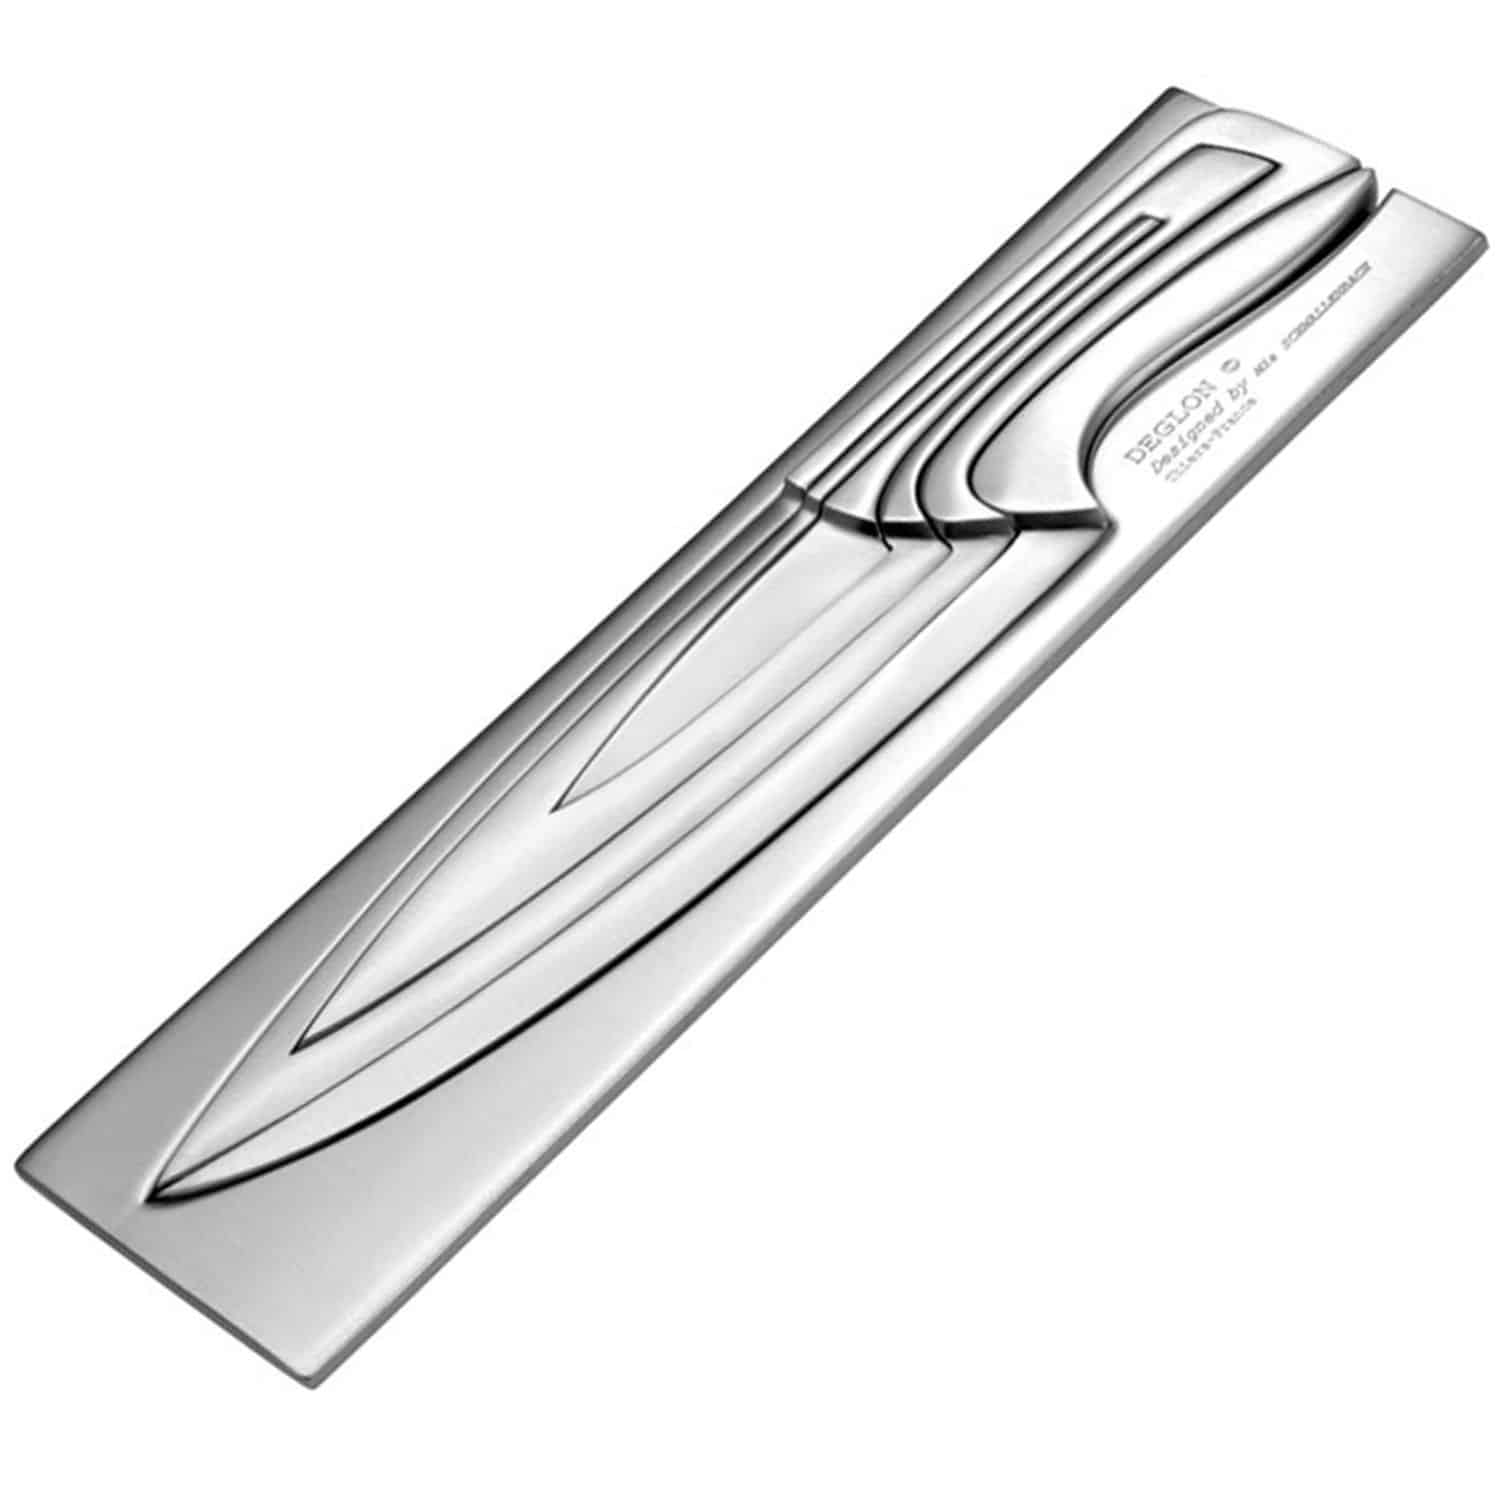 Deglon Meeting Knife Set Cool Kitchen Gadget